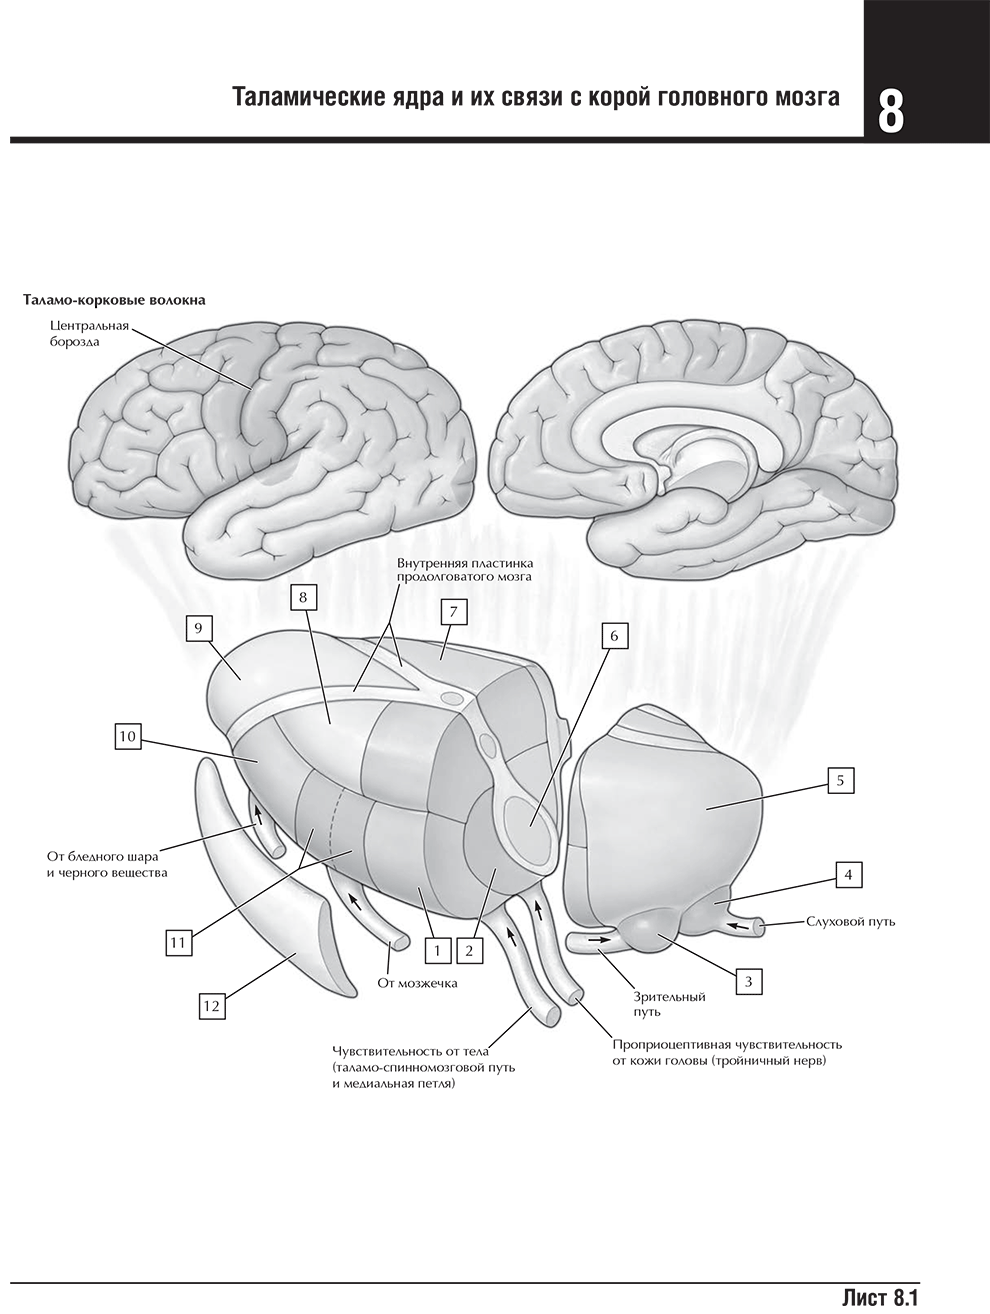 Таламические ядра и их связи с корой головного мозга